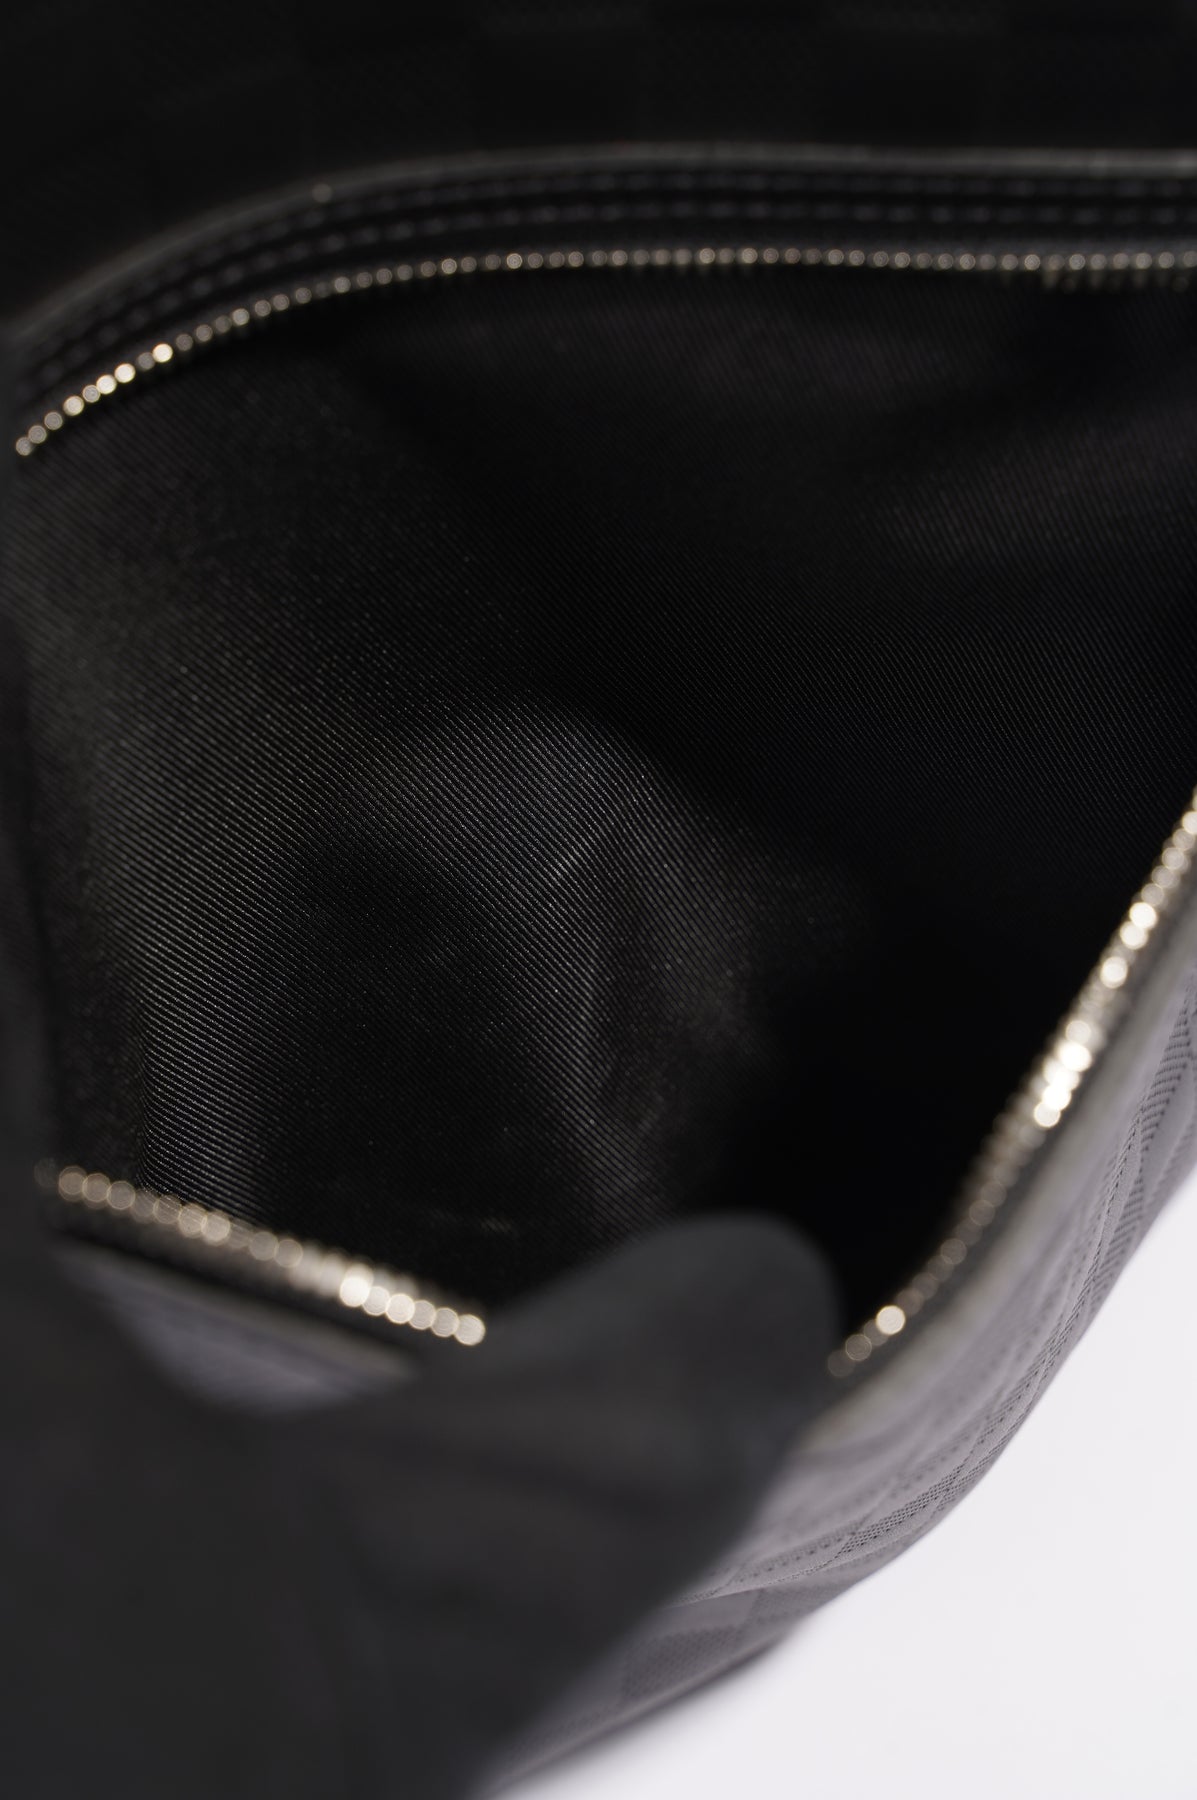 Shop Louis Vuitton Michael backpack nv2 (N45287) by design◇base